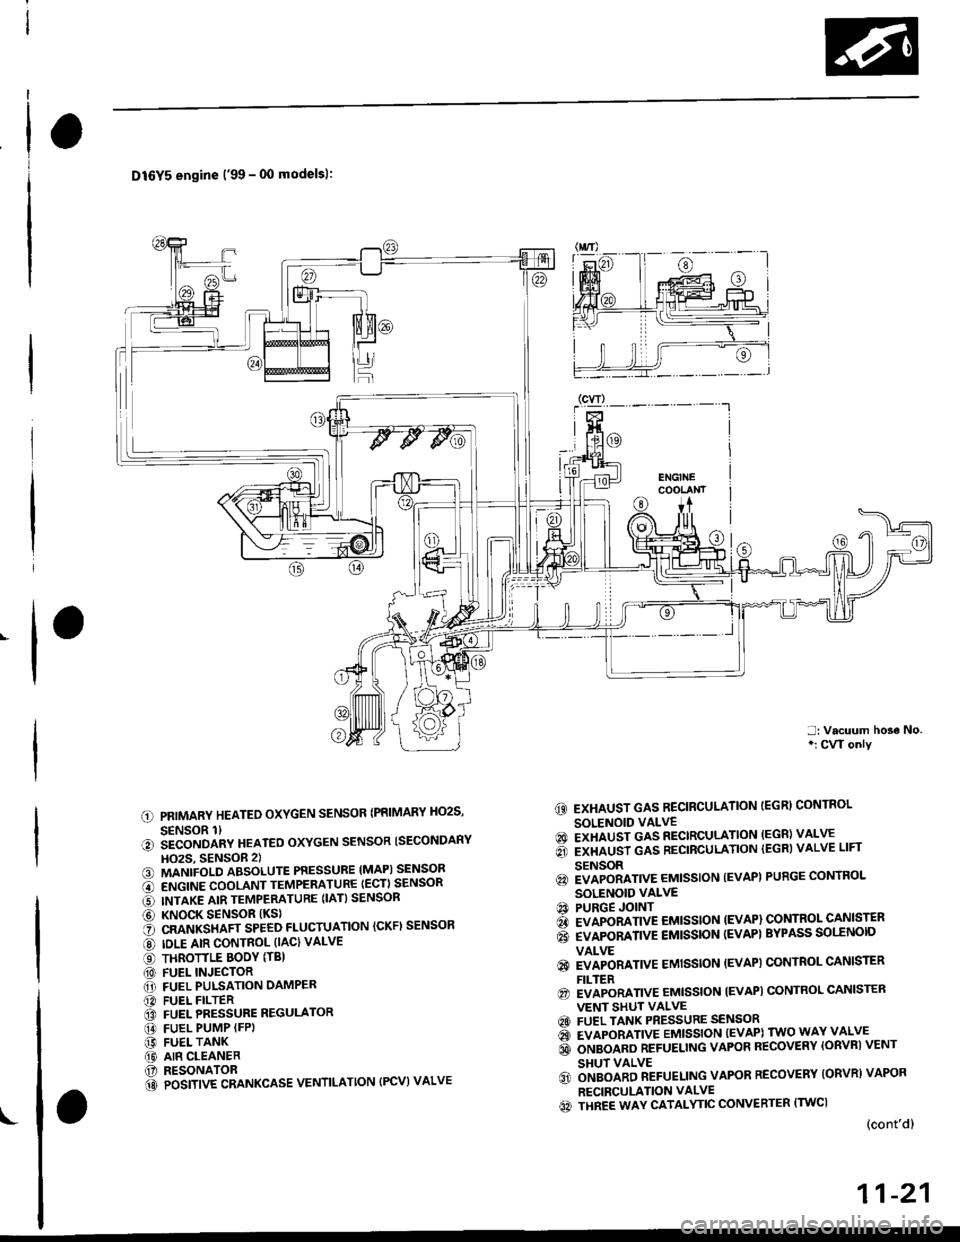 HONDA CIVIC 1996 6.G Workshop Manual D16Y5 engine (99 - 00 modelsl:
O) PRIMARY HEATED OXYGEN SENSOR (PBIMARY HO2S,
SENSOR 1)
O SECONDARY HEATEO OXYGEN SENSOR {SECONDARY
HO2S. SENSOR 2)
6] MANIFOLD ABSOLUTE PRESSURE IMAPI SENSOR
rO CruCI